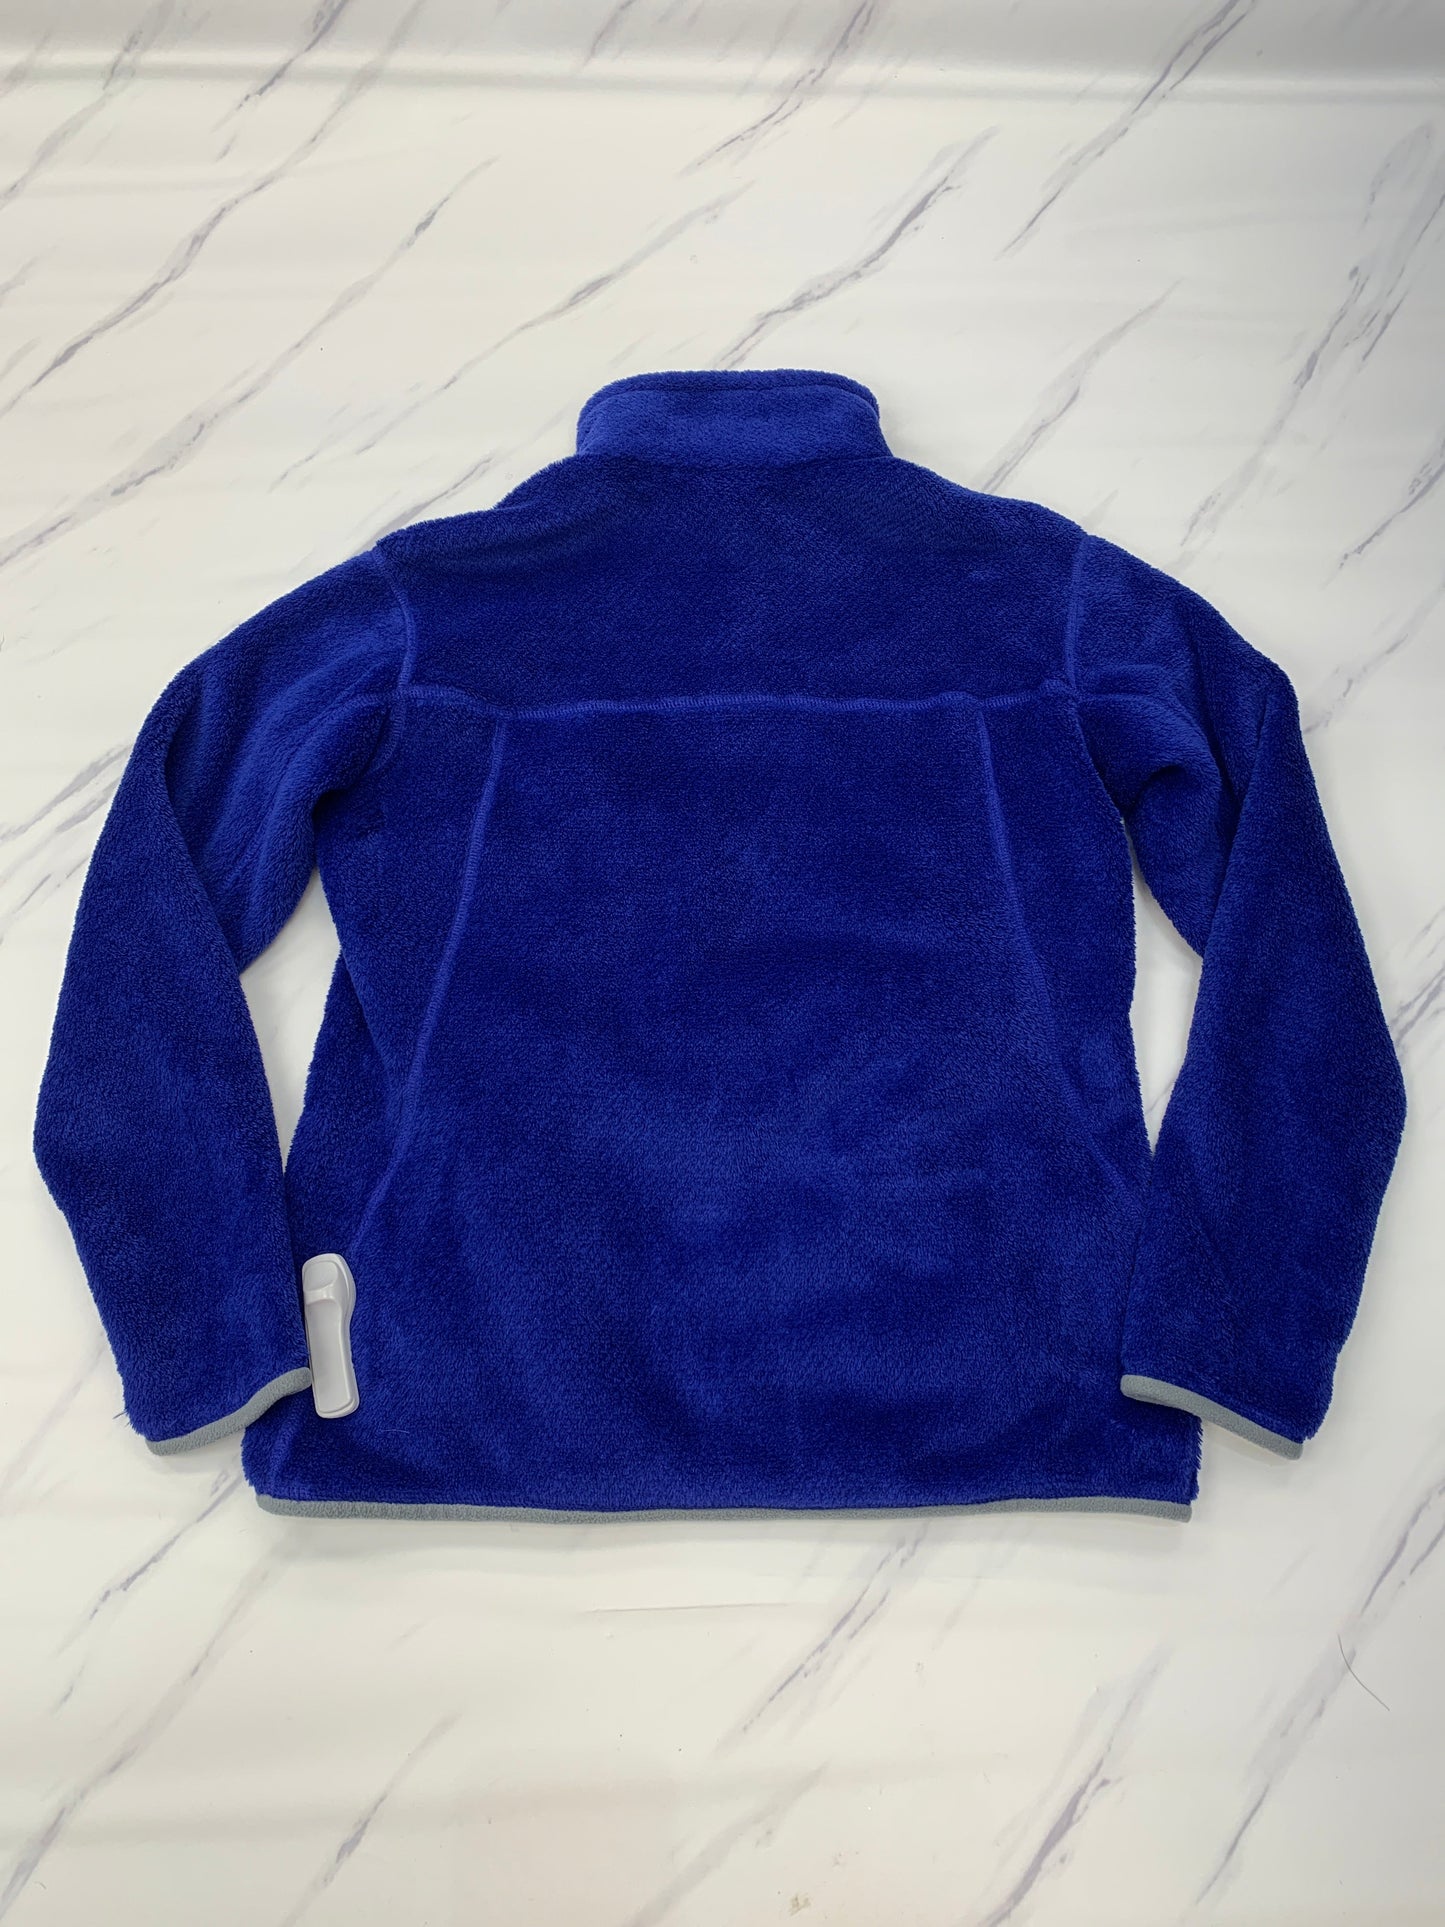 Blue Athletic Jacket Patagonia, Size L